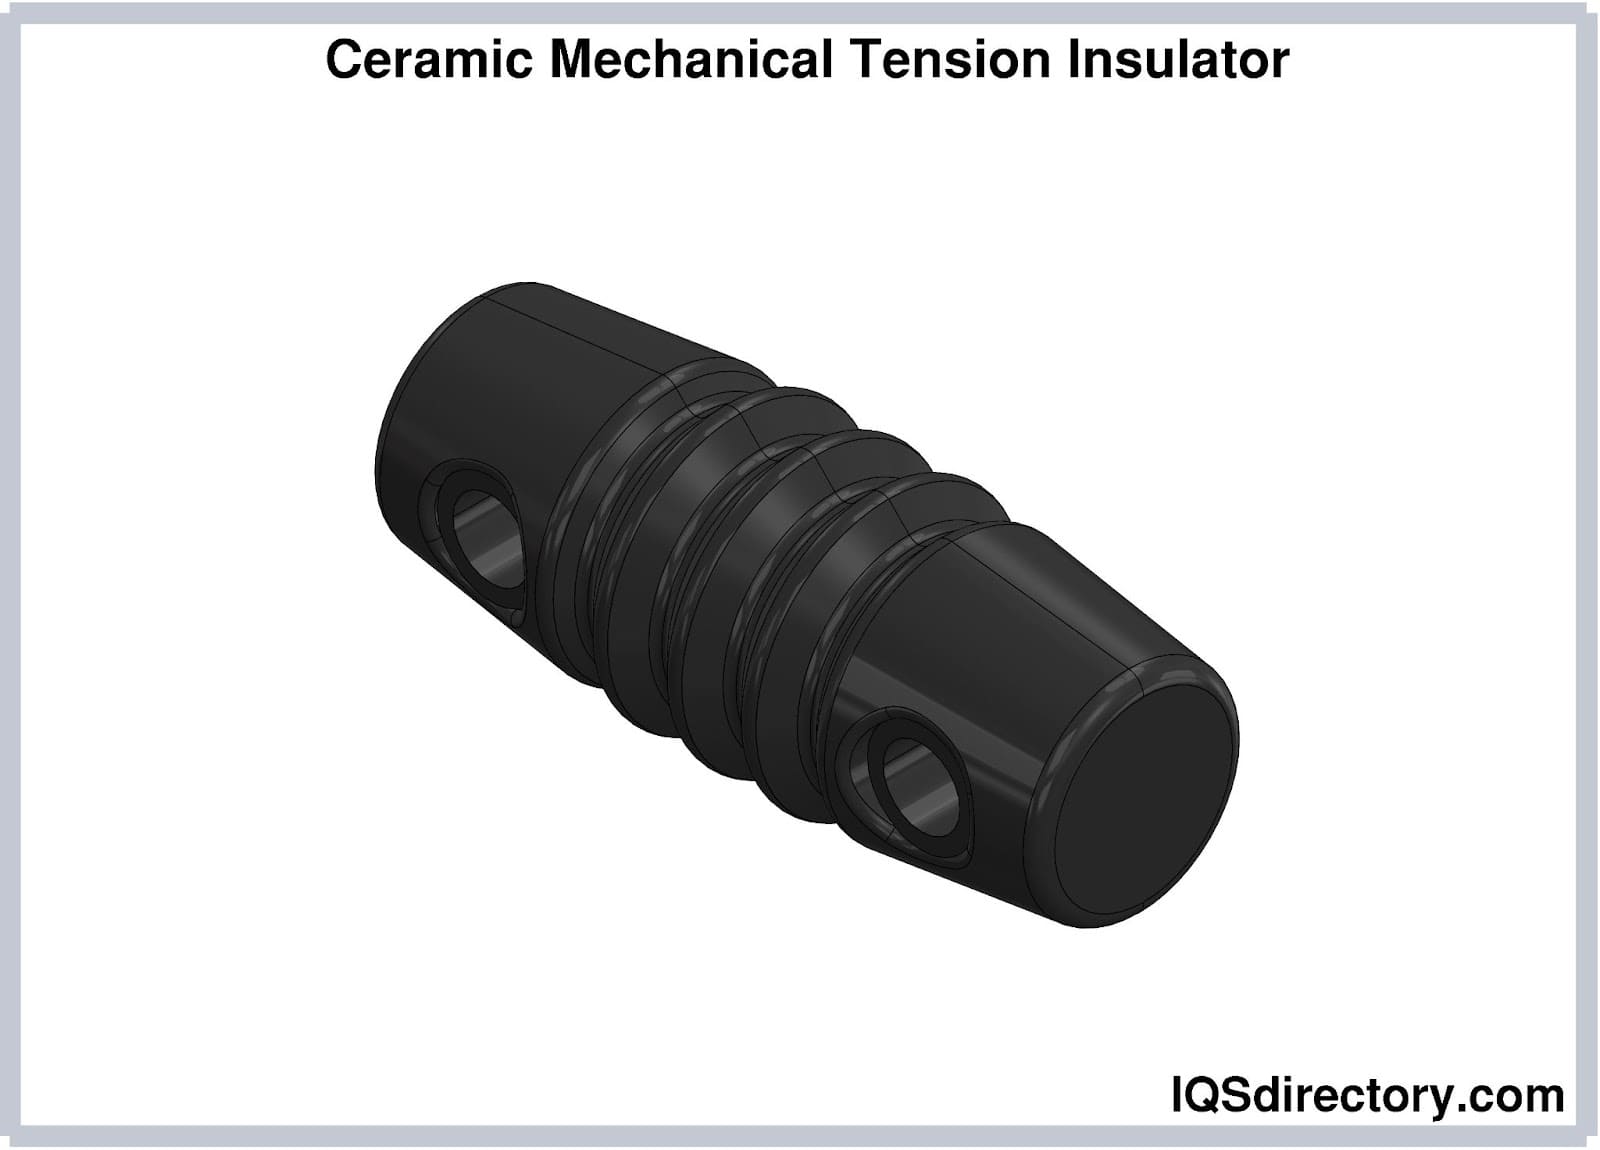 Ceramic Mechanical Tension Insulator